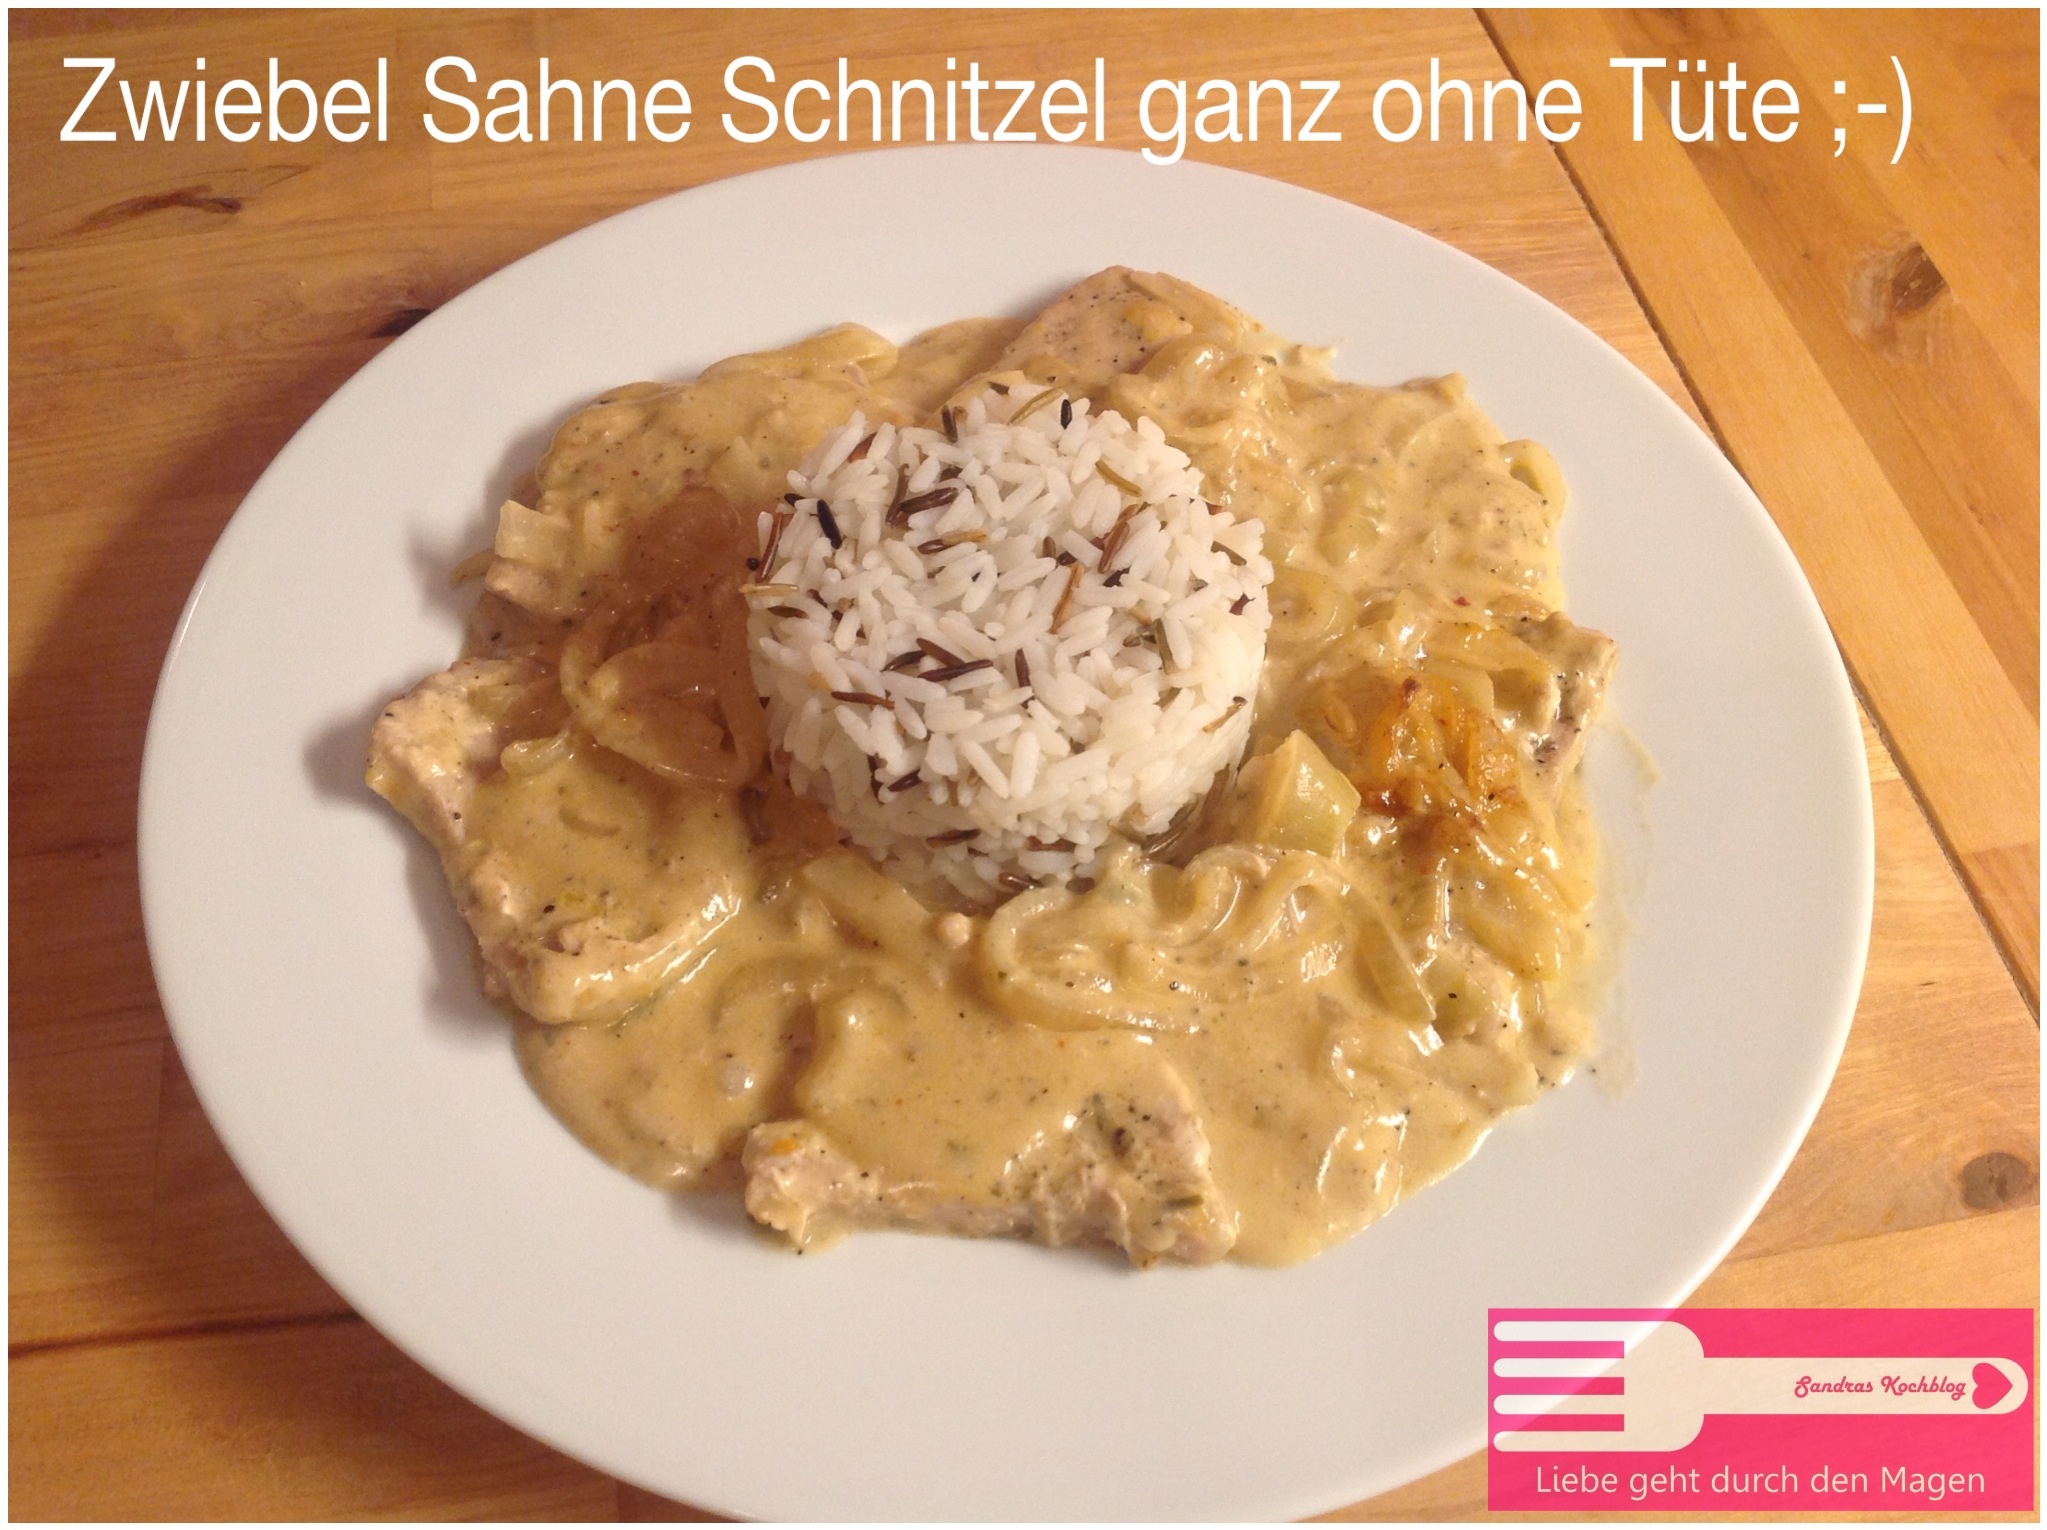 Zwiebel Sahne Schnitzel - Sandras Kochblog